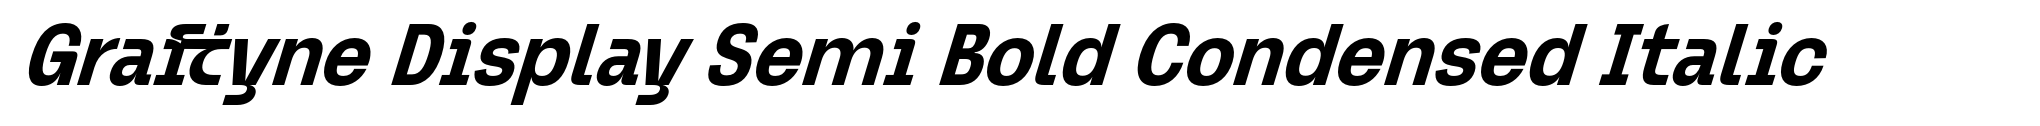 Graftyne Display Semi Bold Condensed Italic image